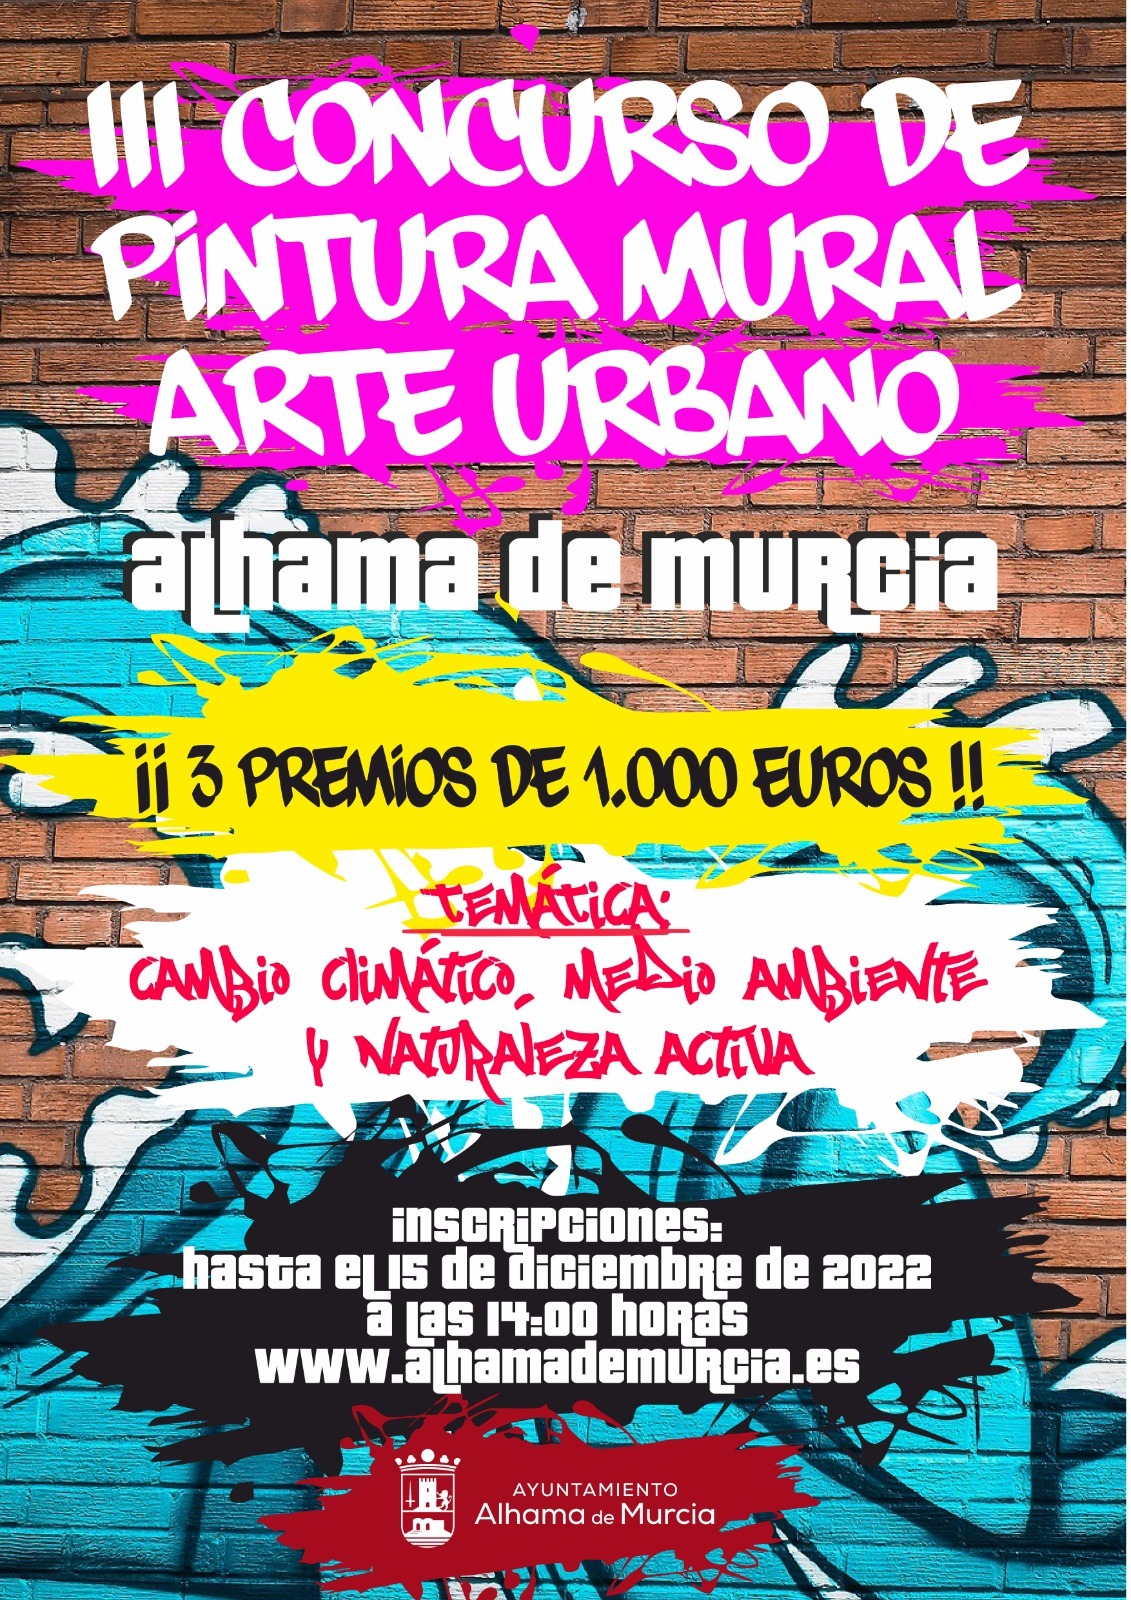 ALHAMA DE MURCIA | III Concurso de Pintura Mural Arte Urbano